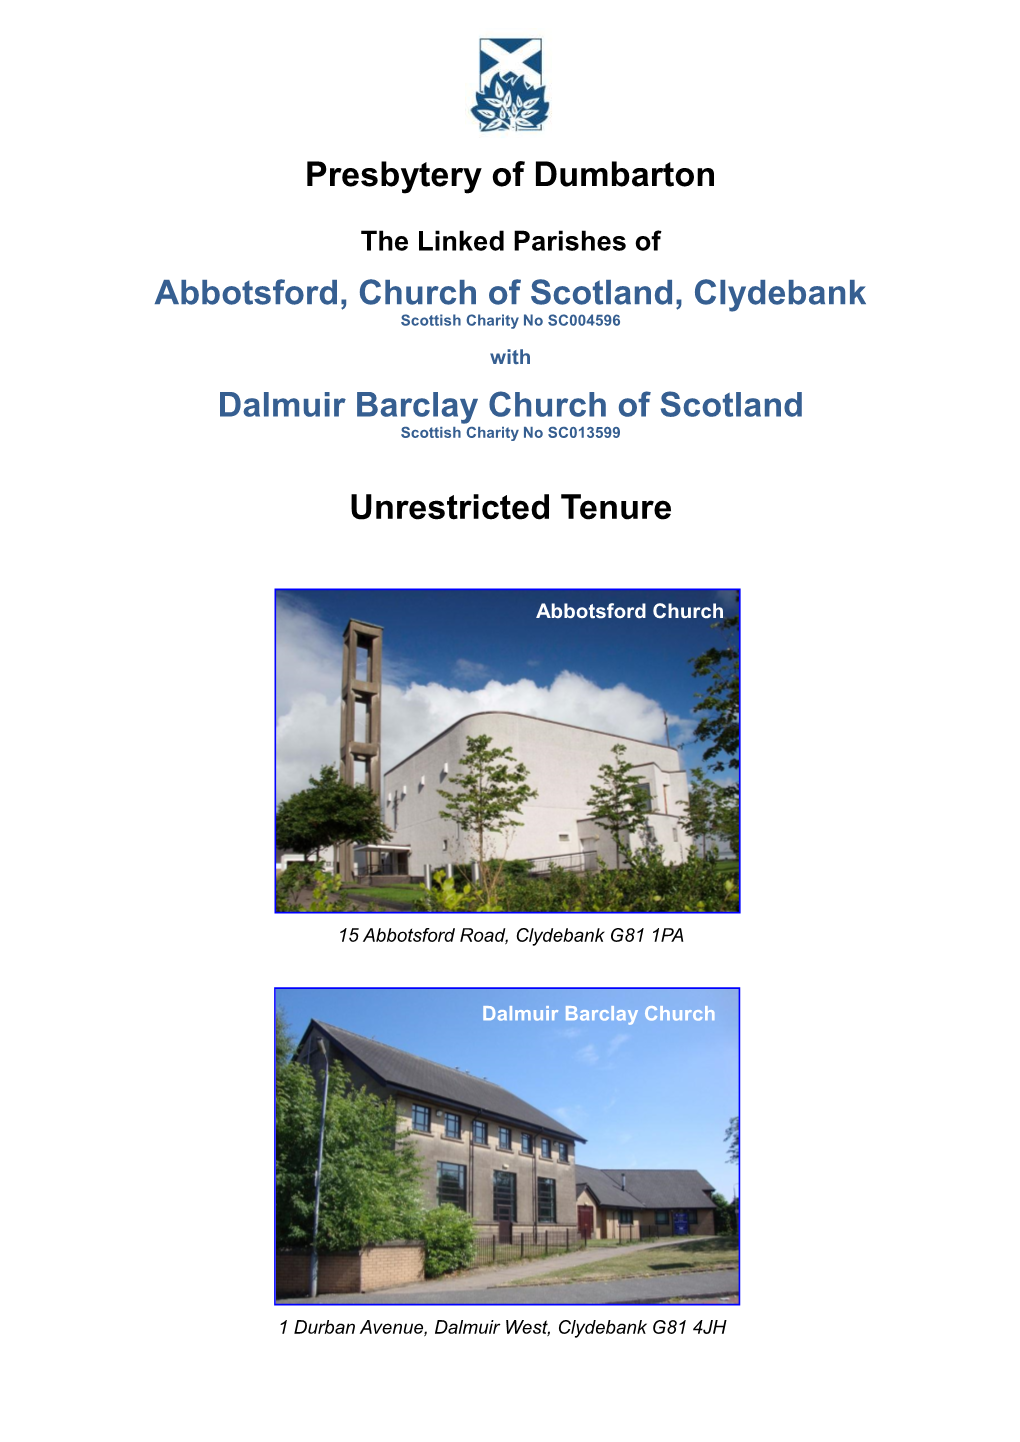 Presbytery of Dumbarton Abbotsford, Church of Scotland, Clydebank Dalmuir Barclay Church of Scotland Unrestricted Tenure